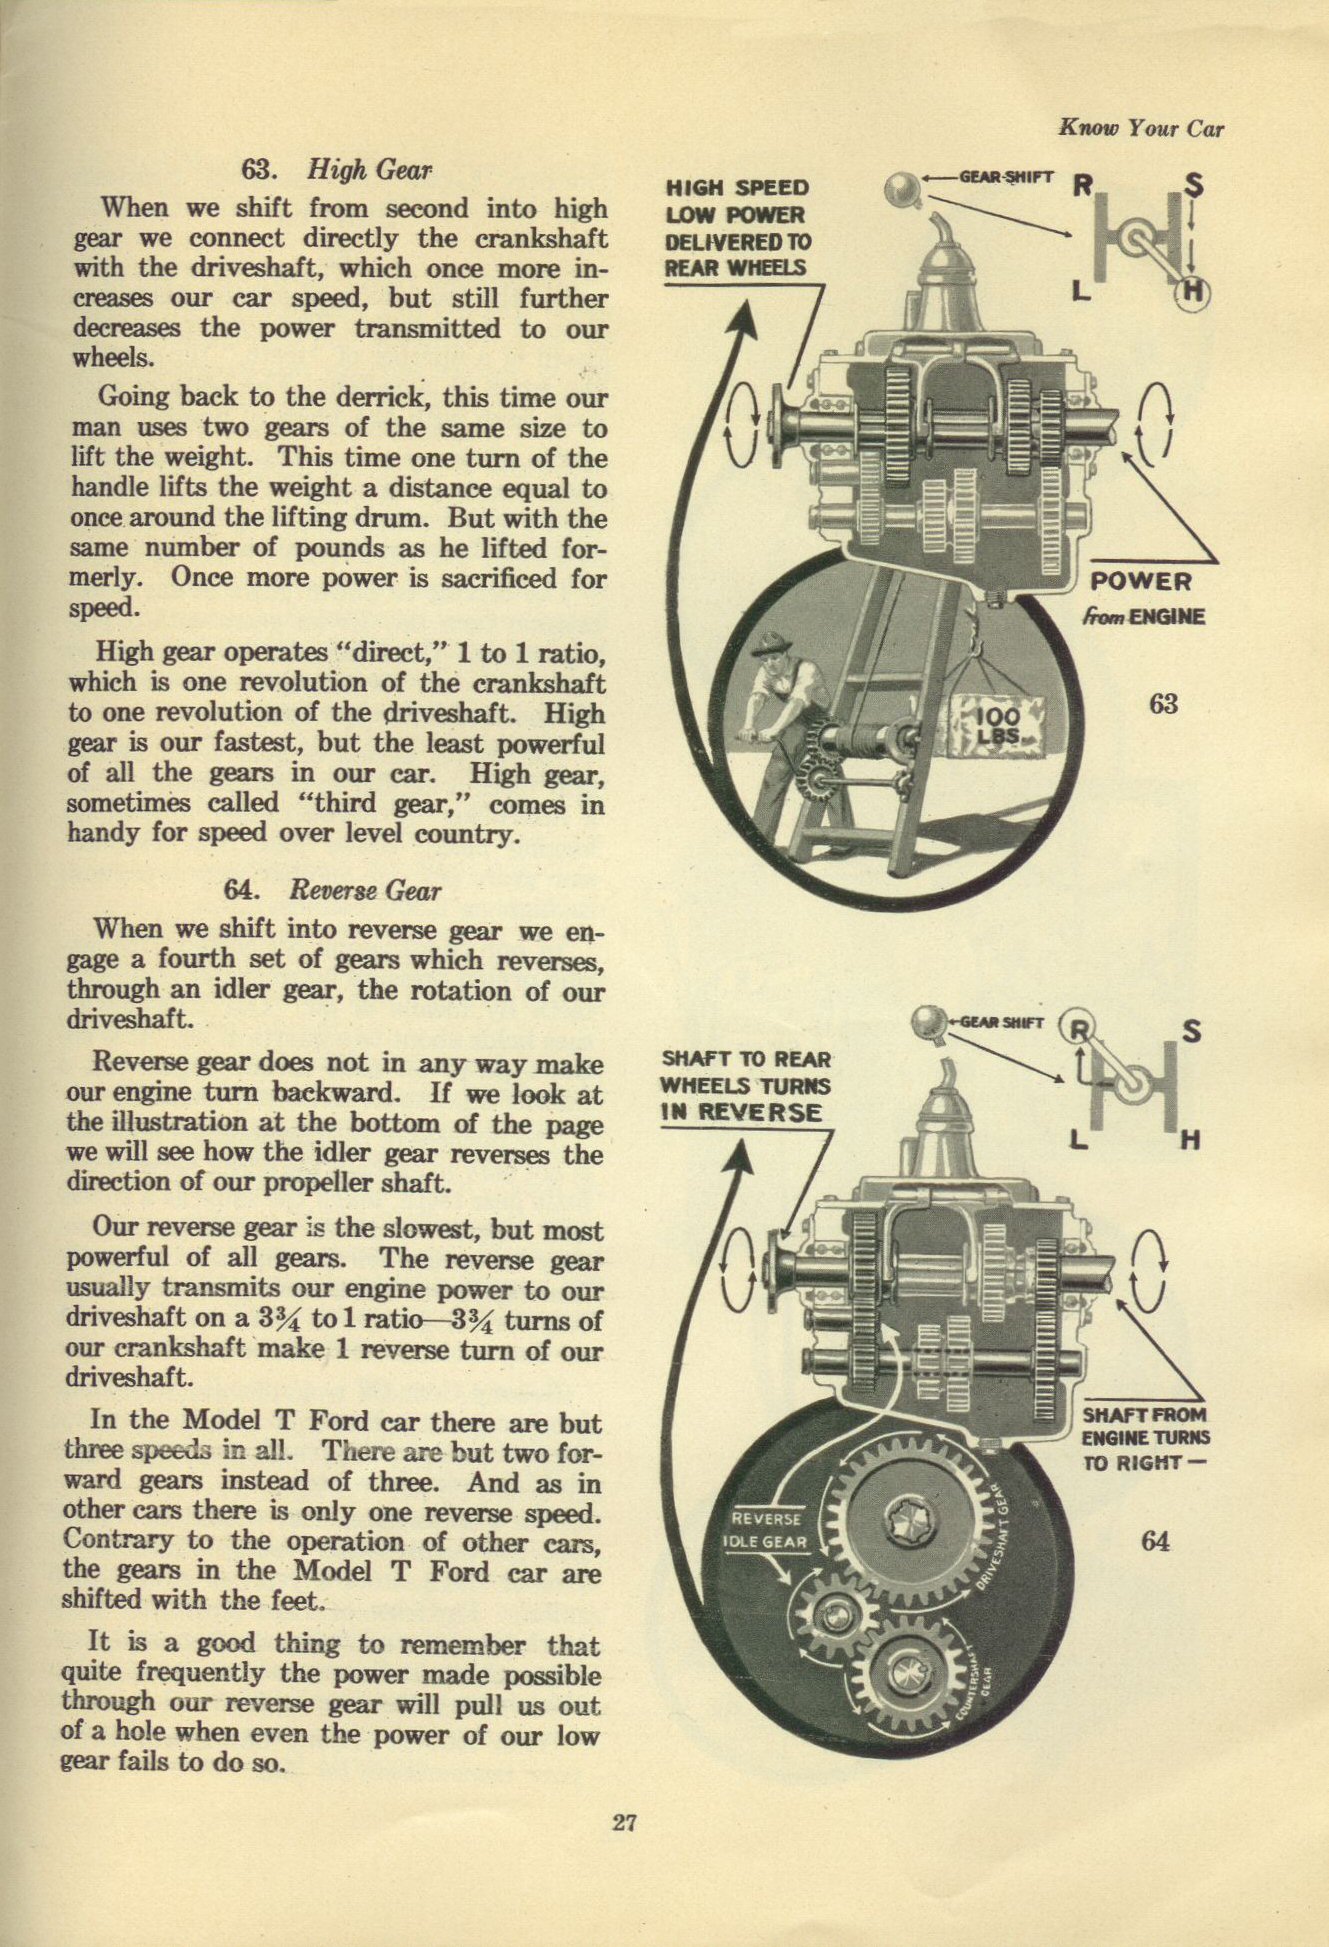 1928 Know Your Car Handbook Page 24